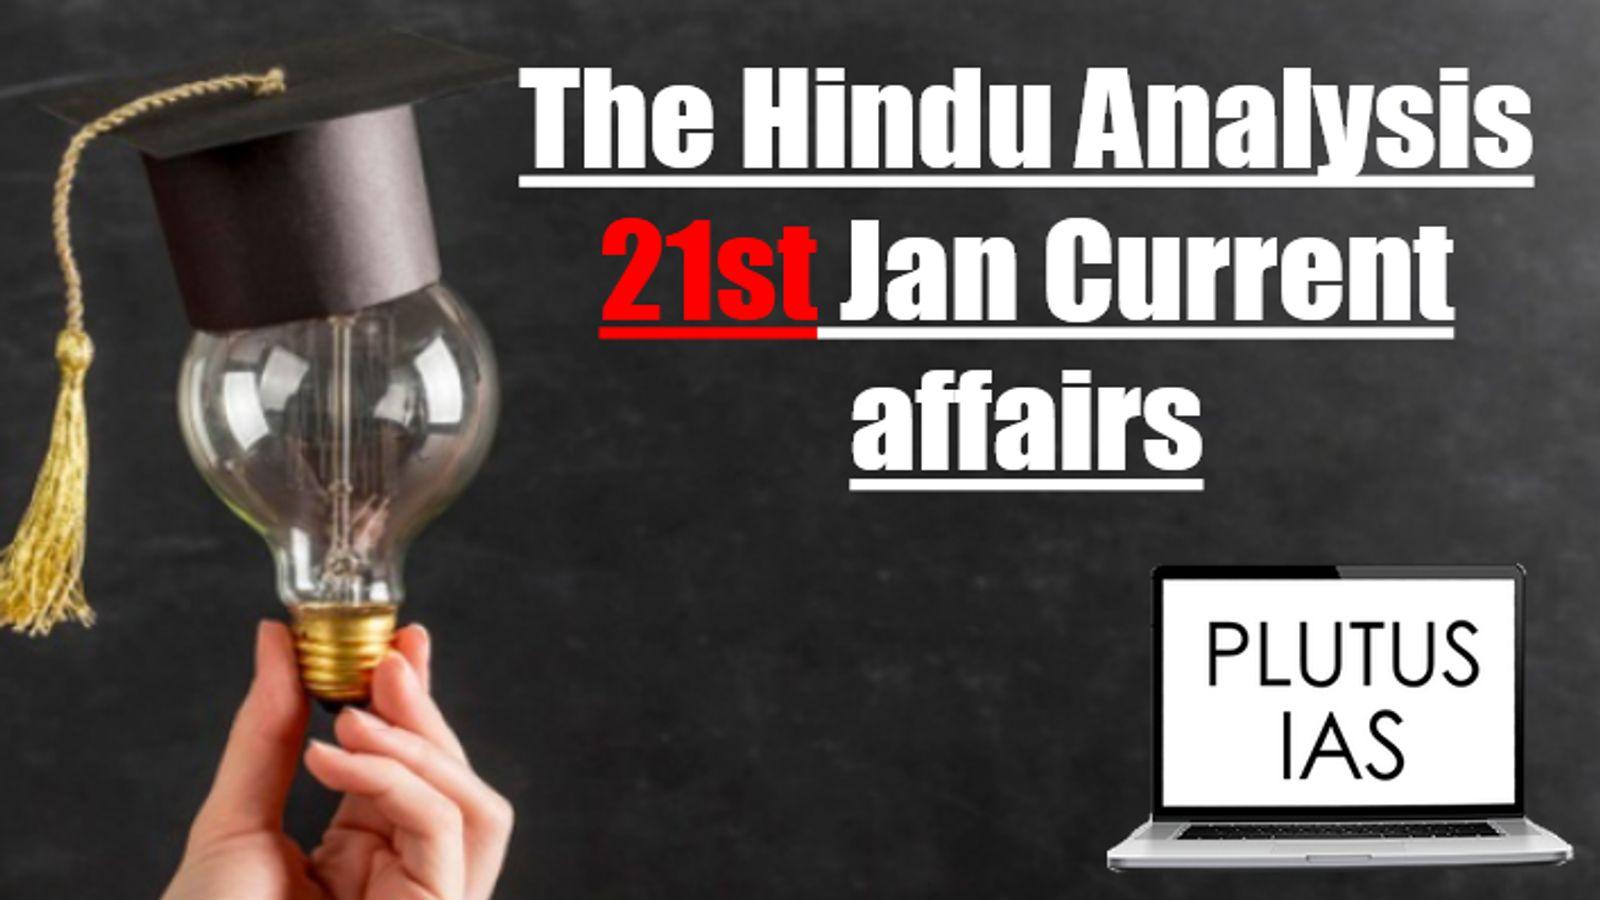 The Hindu Analysis 21st January